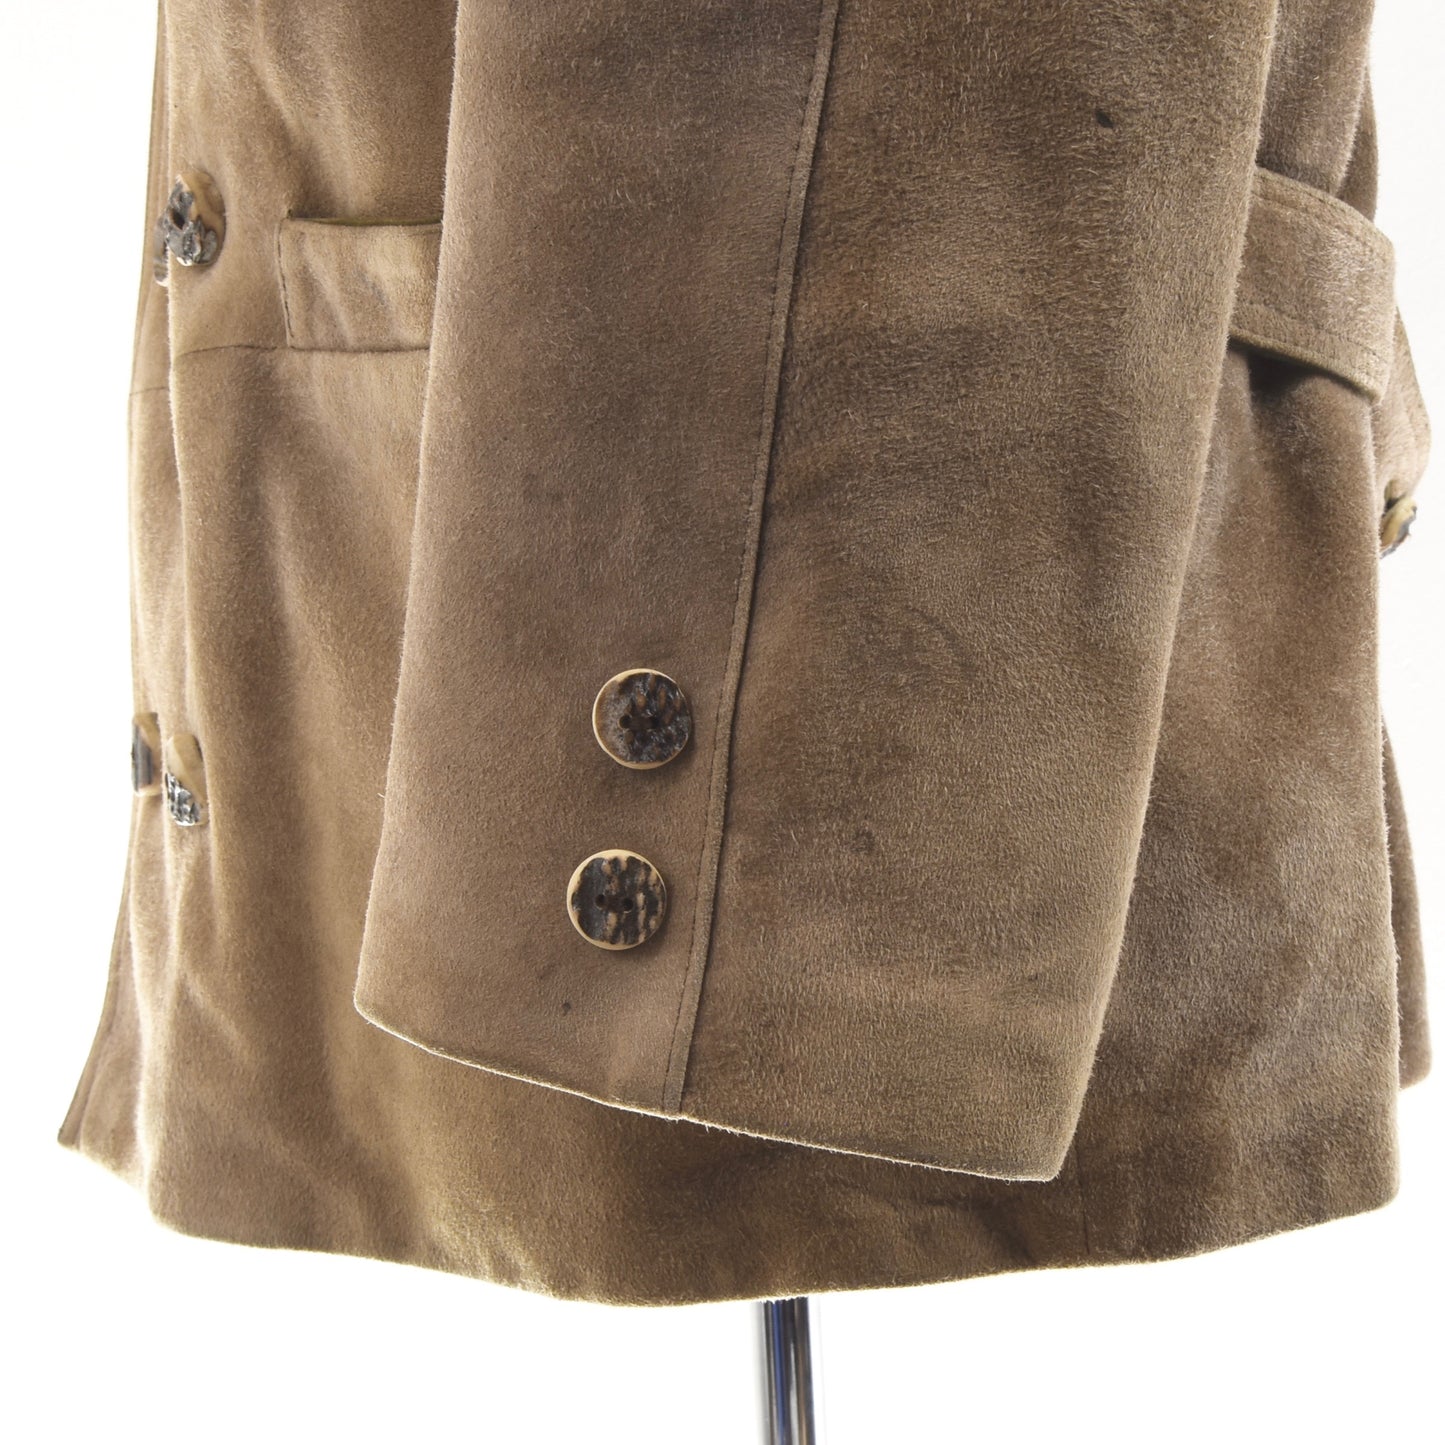 Die Erlmeier Genuine Leather Janker/Jacket Size 50 - Beige/Brown